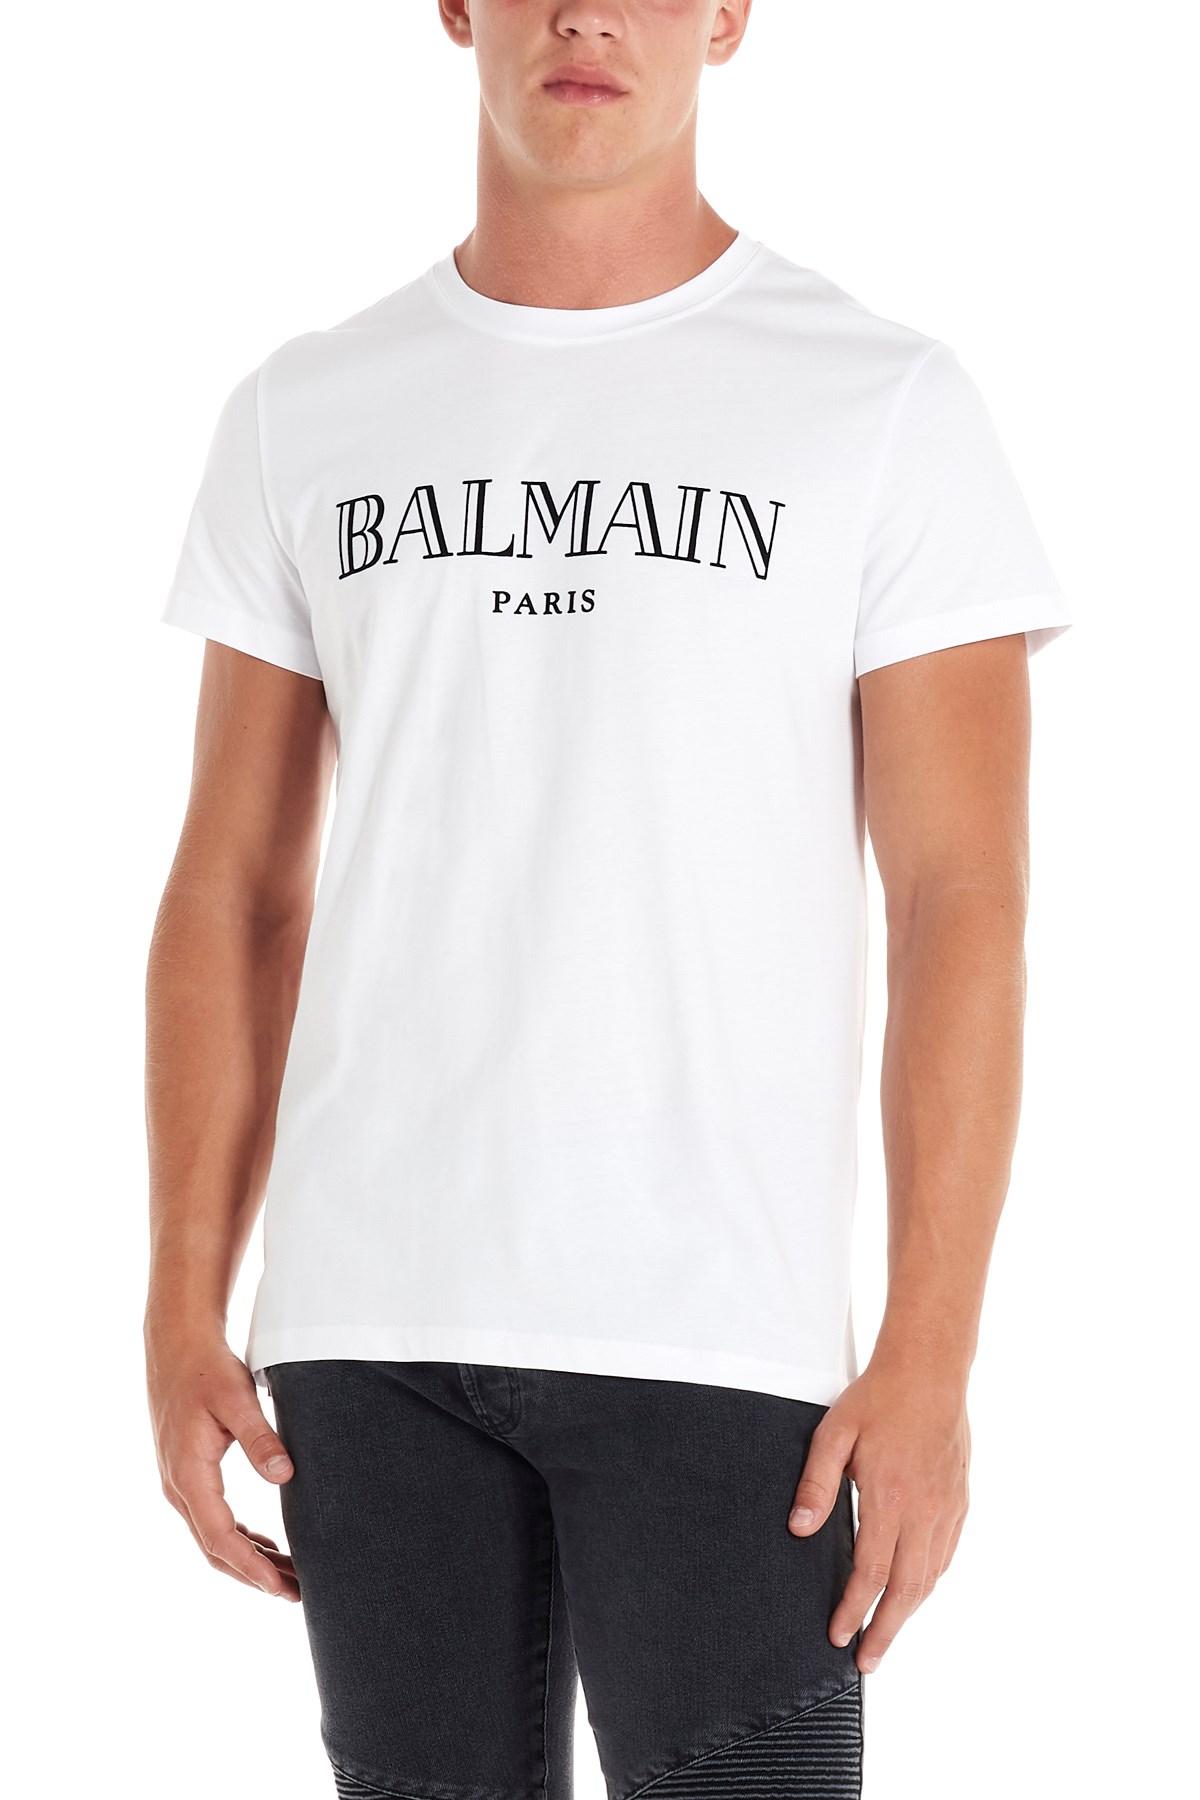 Balmain Cotton Sh11601i312 in White for Men - Save 55% - Lyst